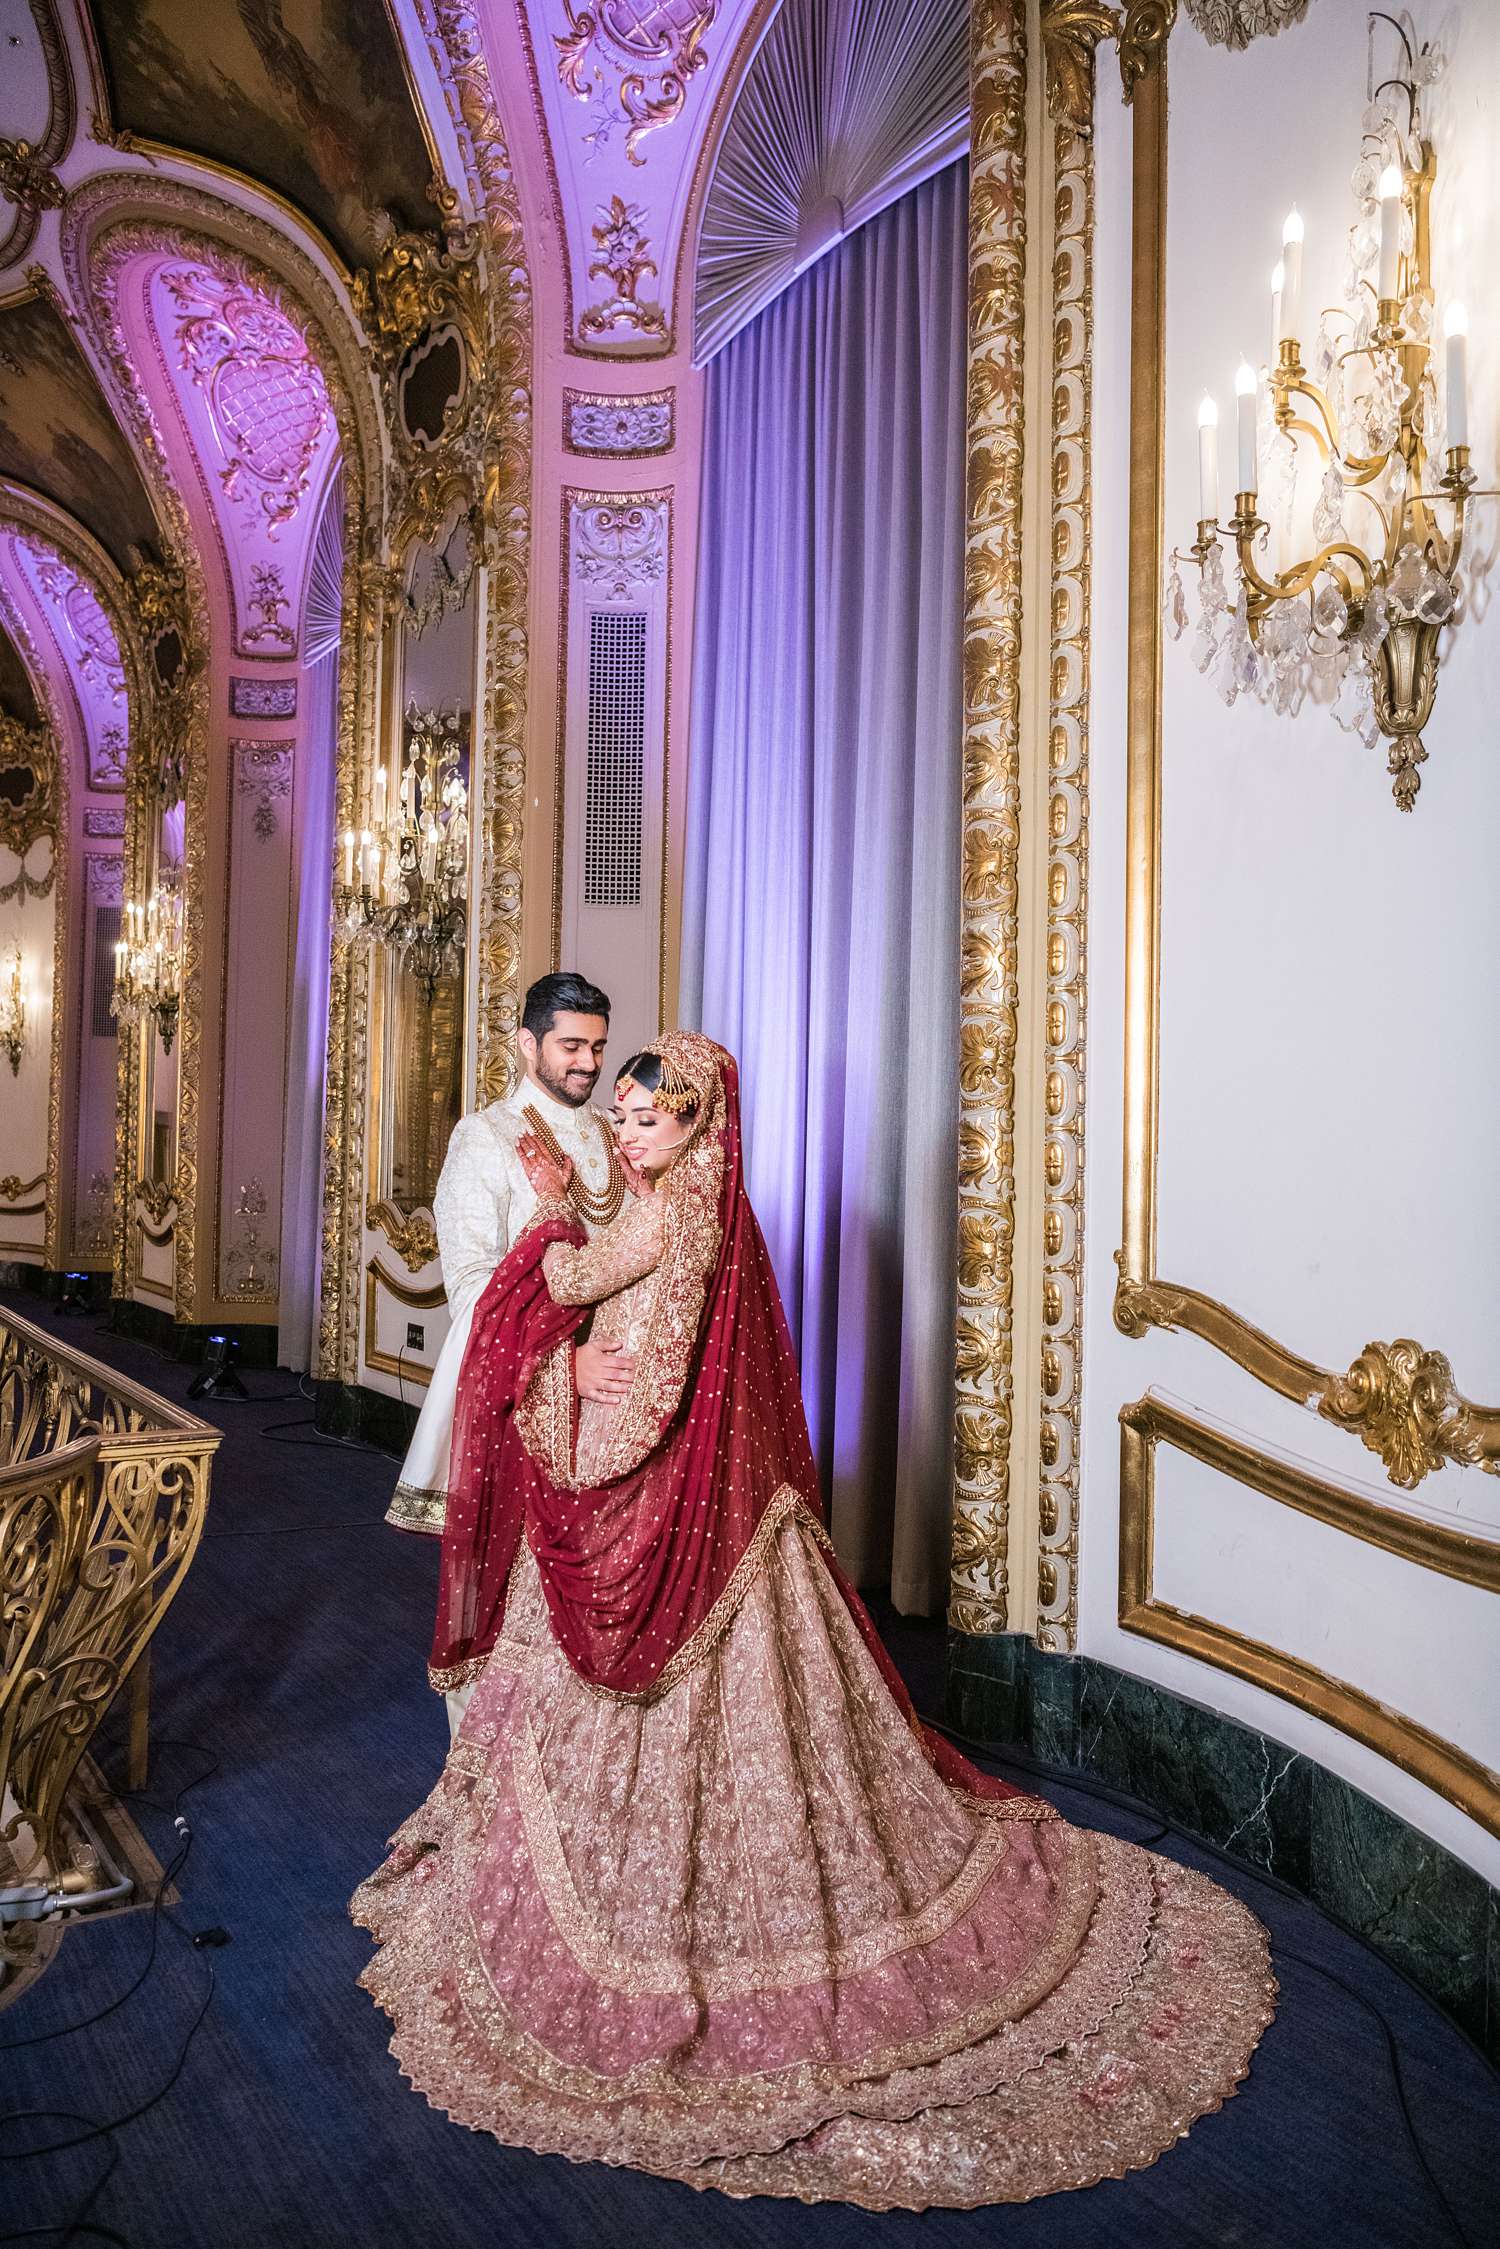 Luxury Pakistani wedding photo portrait at Hilton Chicago photographed by photographer, Maha Studios